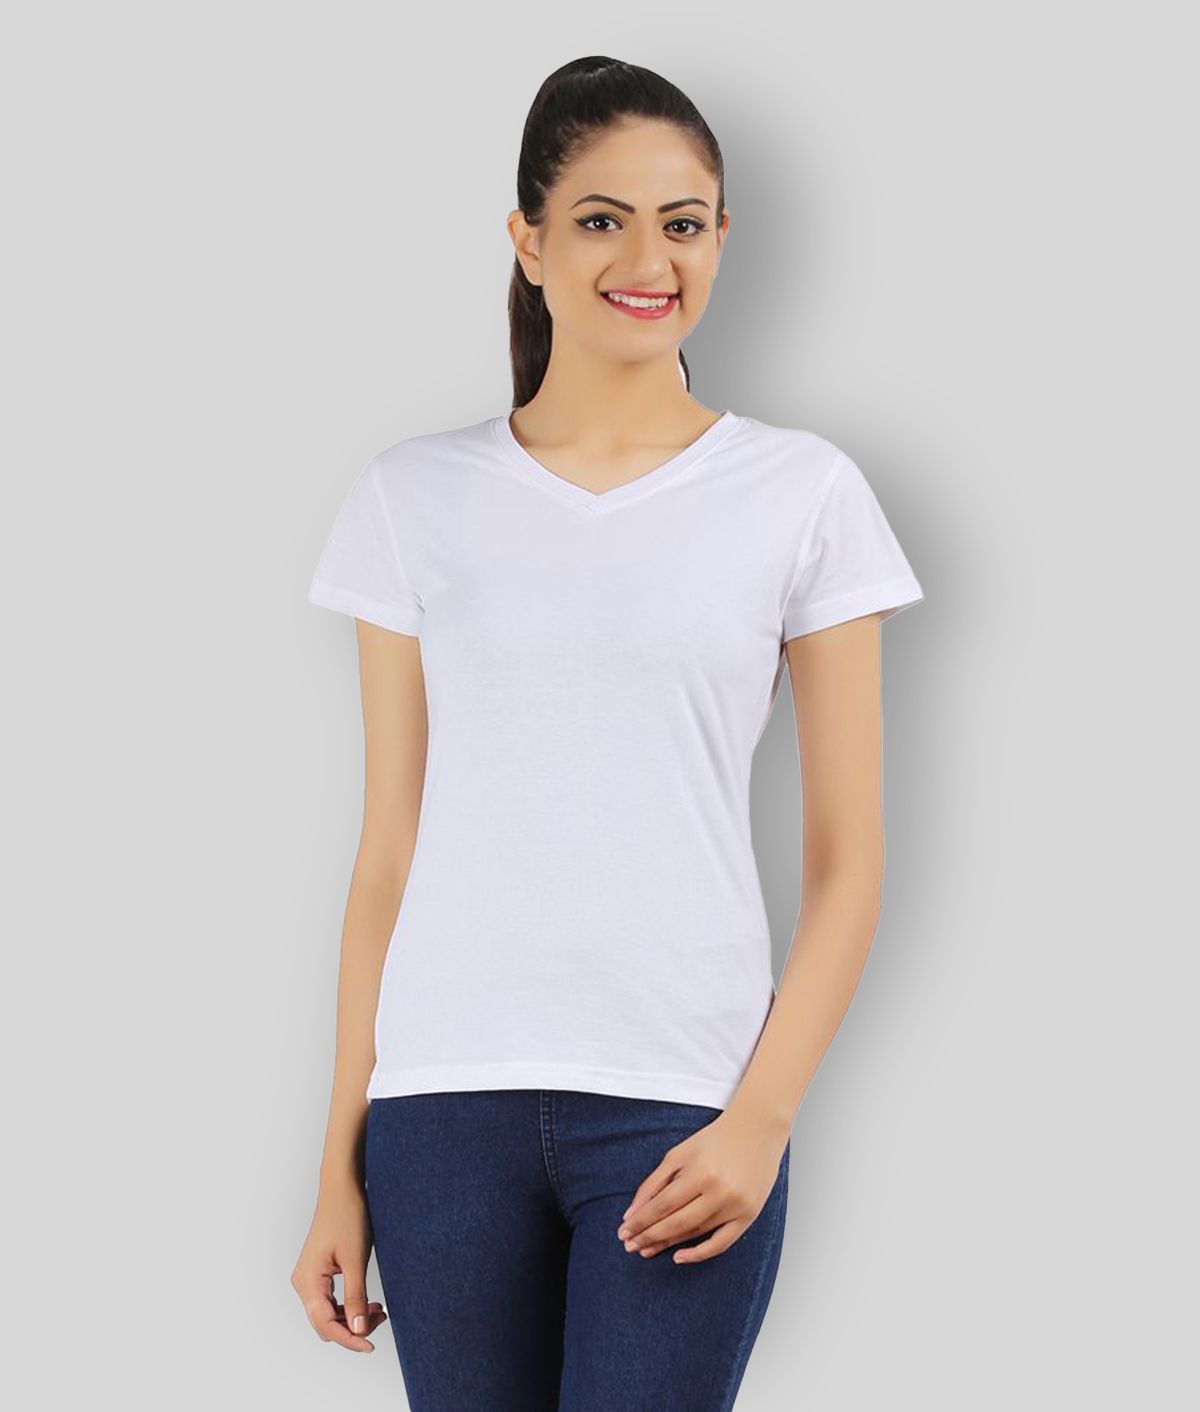 Ap'pulse - White Cotton Regular Fit Women's T-Shirt ( Pack of 1 )